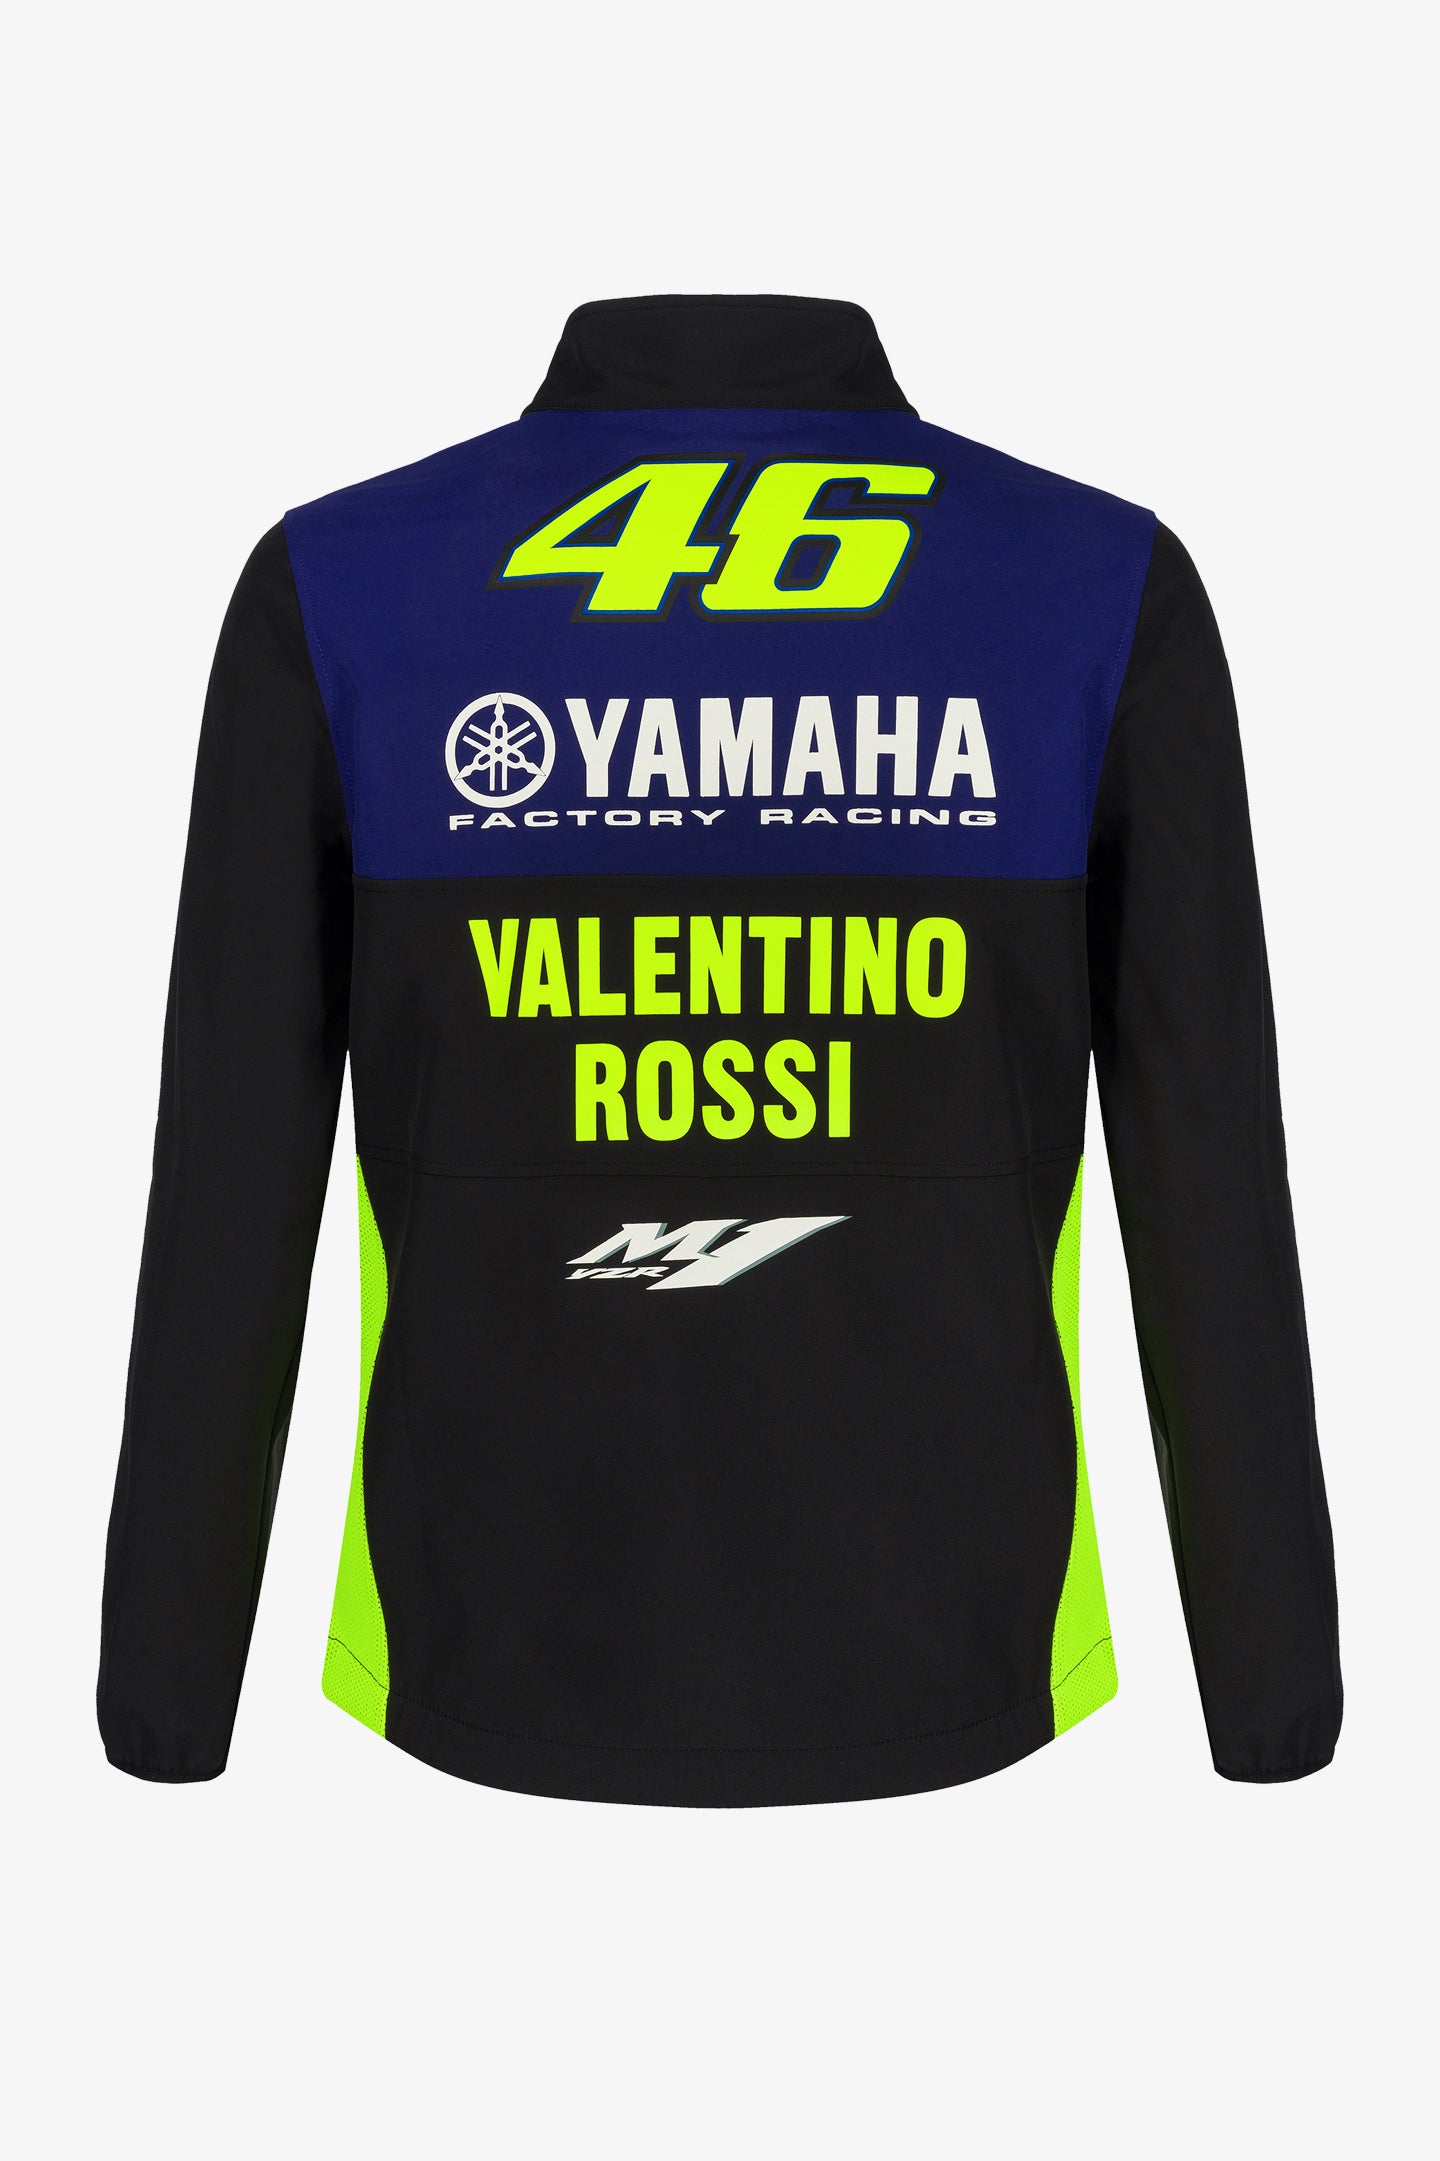 PORTACHIAVI YAMAHA FACTORY RACING VR46 ORIGINALE VALENTINO ROSSI